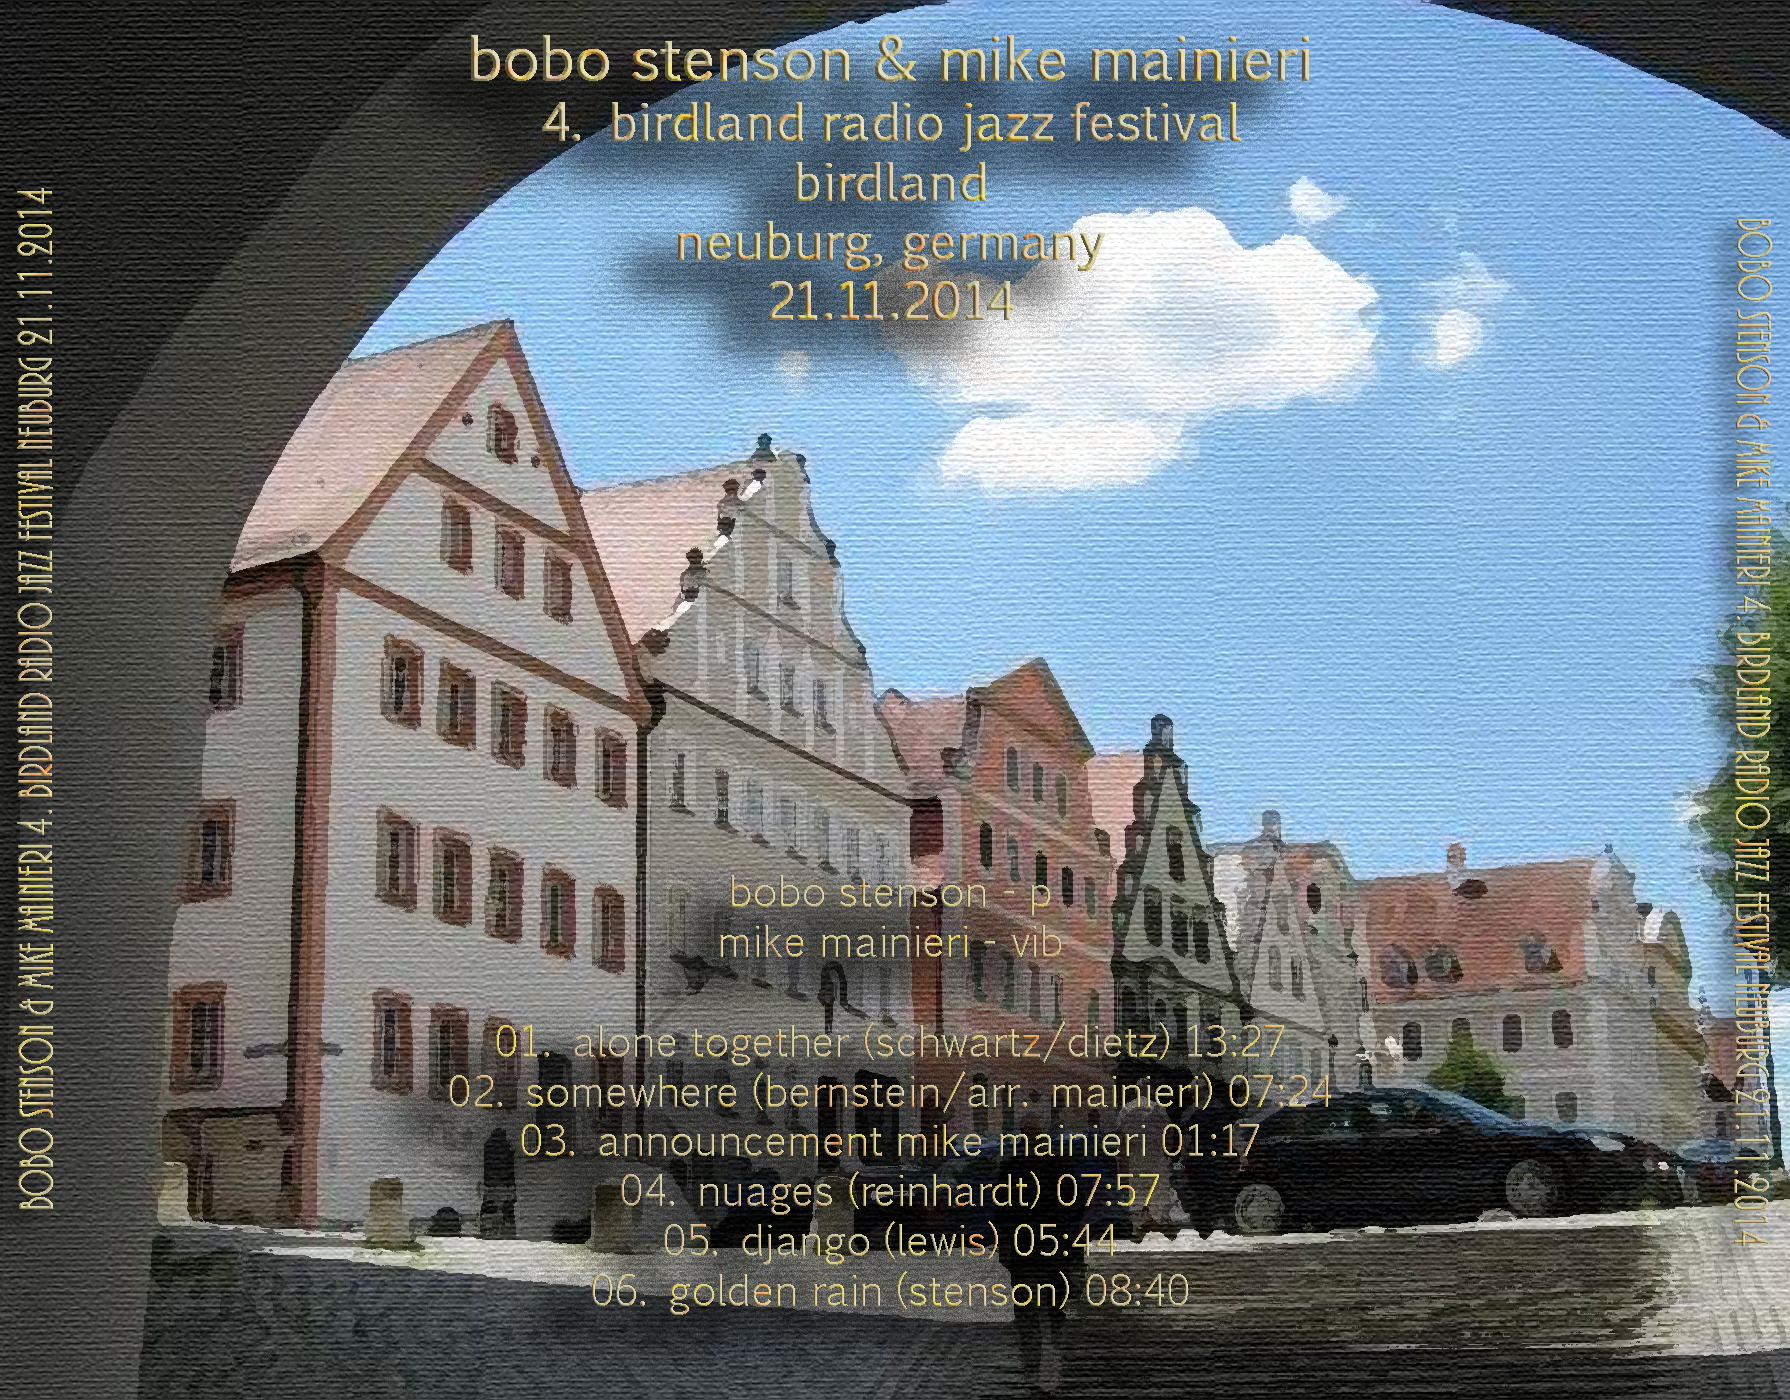 BoboStensonMikeMainieri2014-11-21BirdlandNeuburgGermany (1).jpg